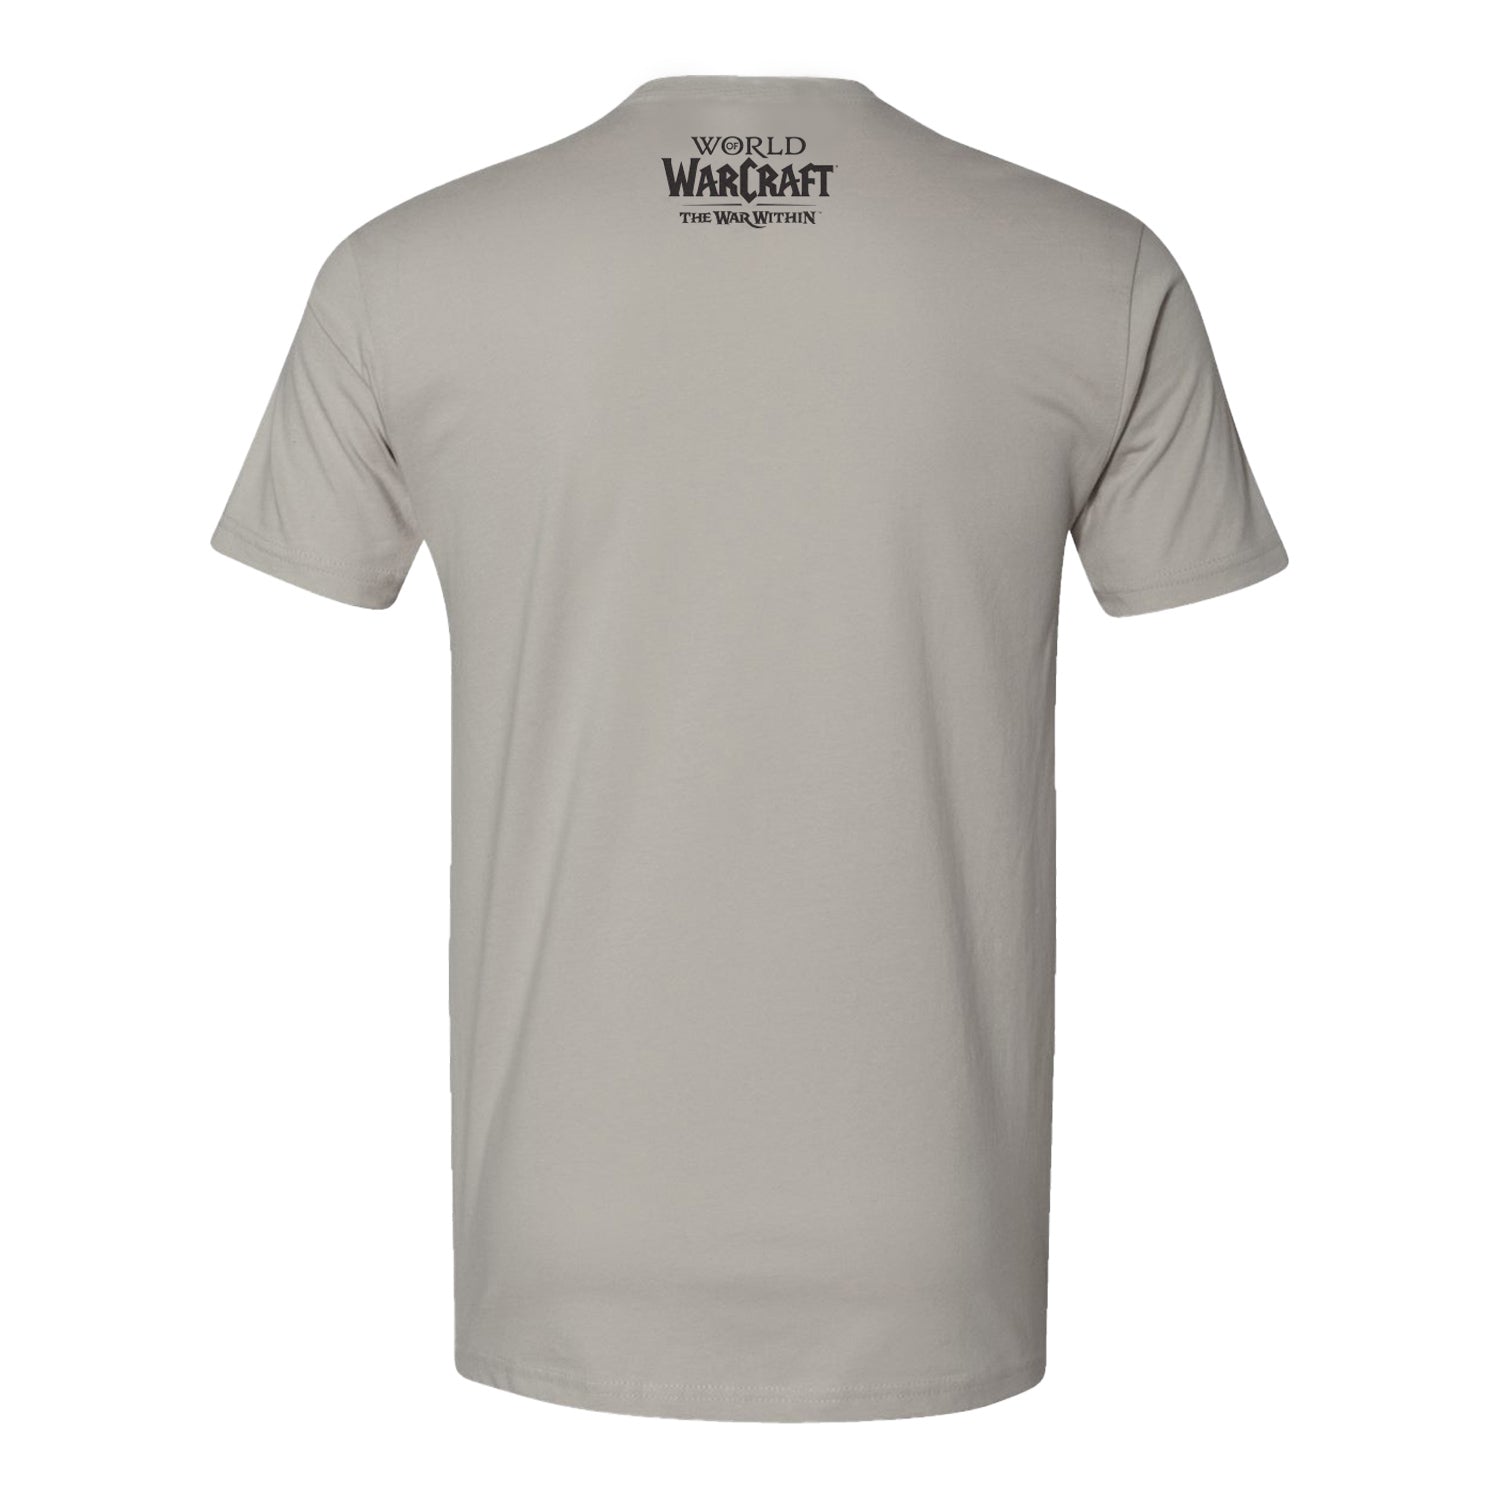 UNDER ARMOUR Womens T-Shirt Top UK 18 XL Grey Cotton